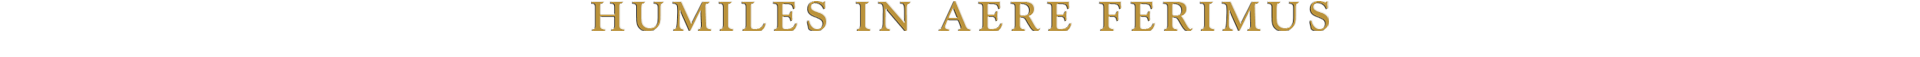 logo 41Paluabt